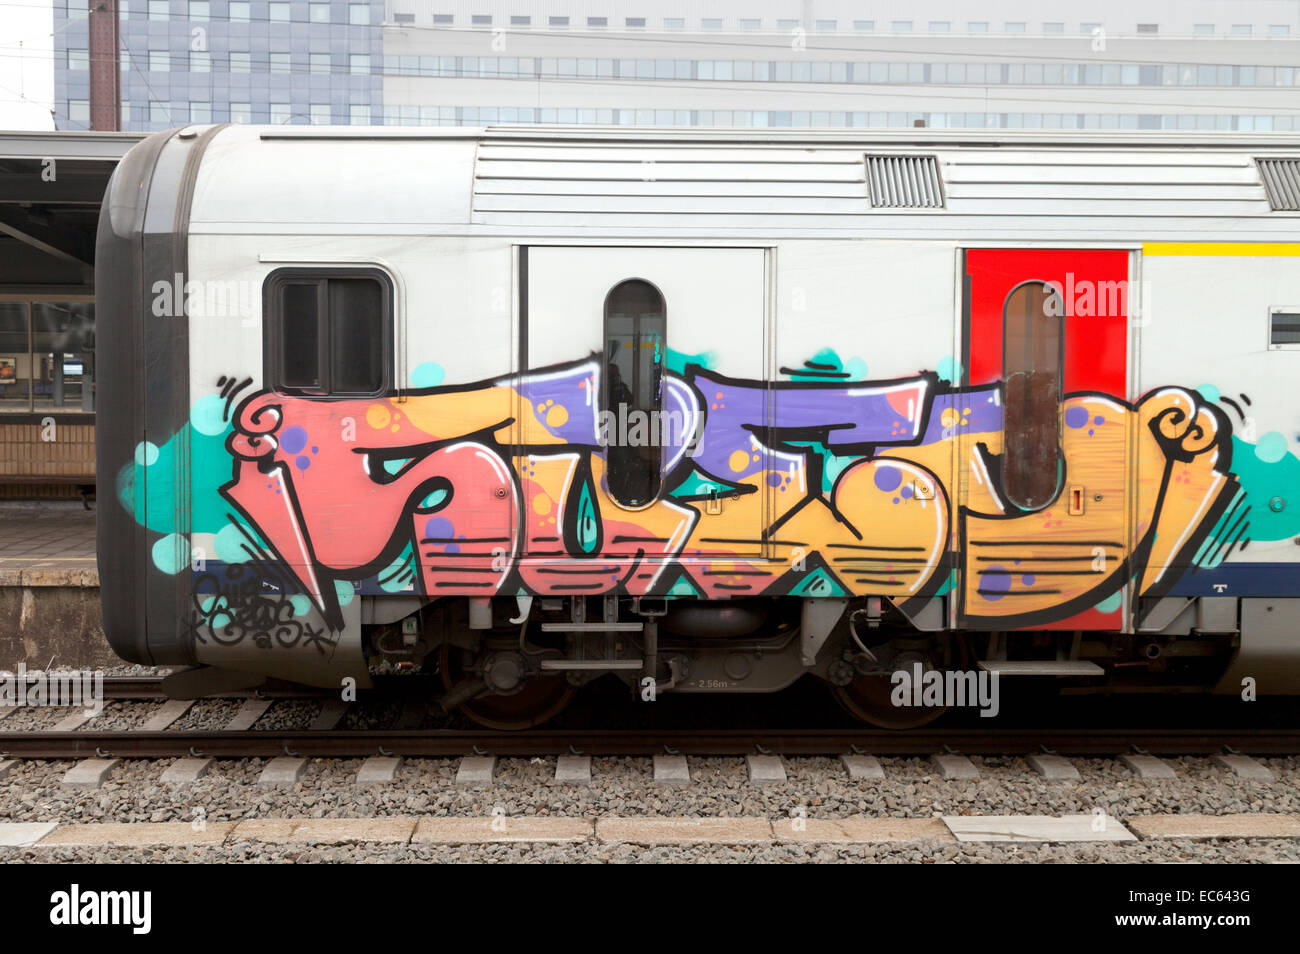 Colourful graffiti on a train in Belgium, Europe Stock Photo